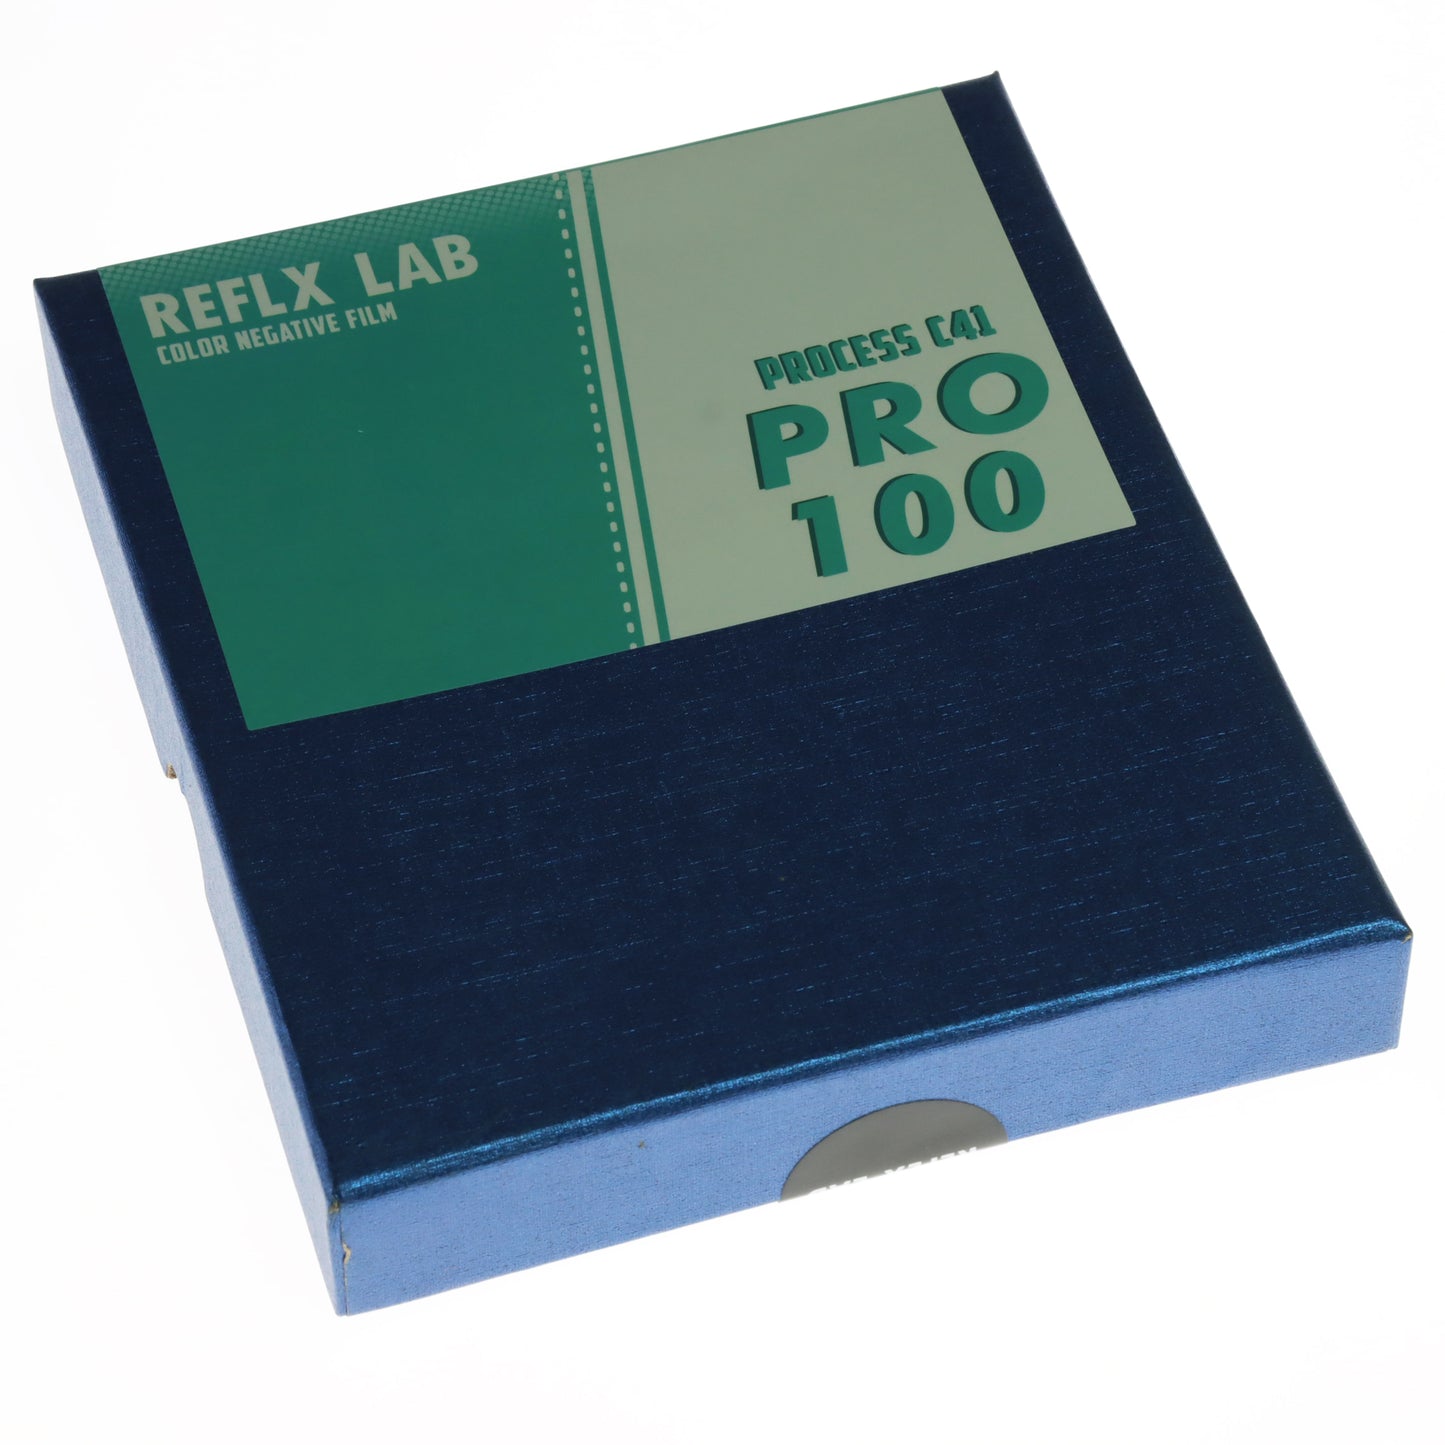 Reflx Lab Pro 100 4x5" 8x10" Color Negative Sheet Film, Free-shipping